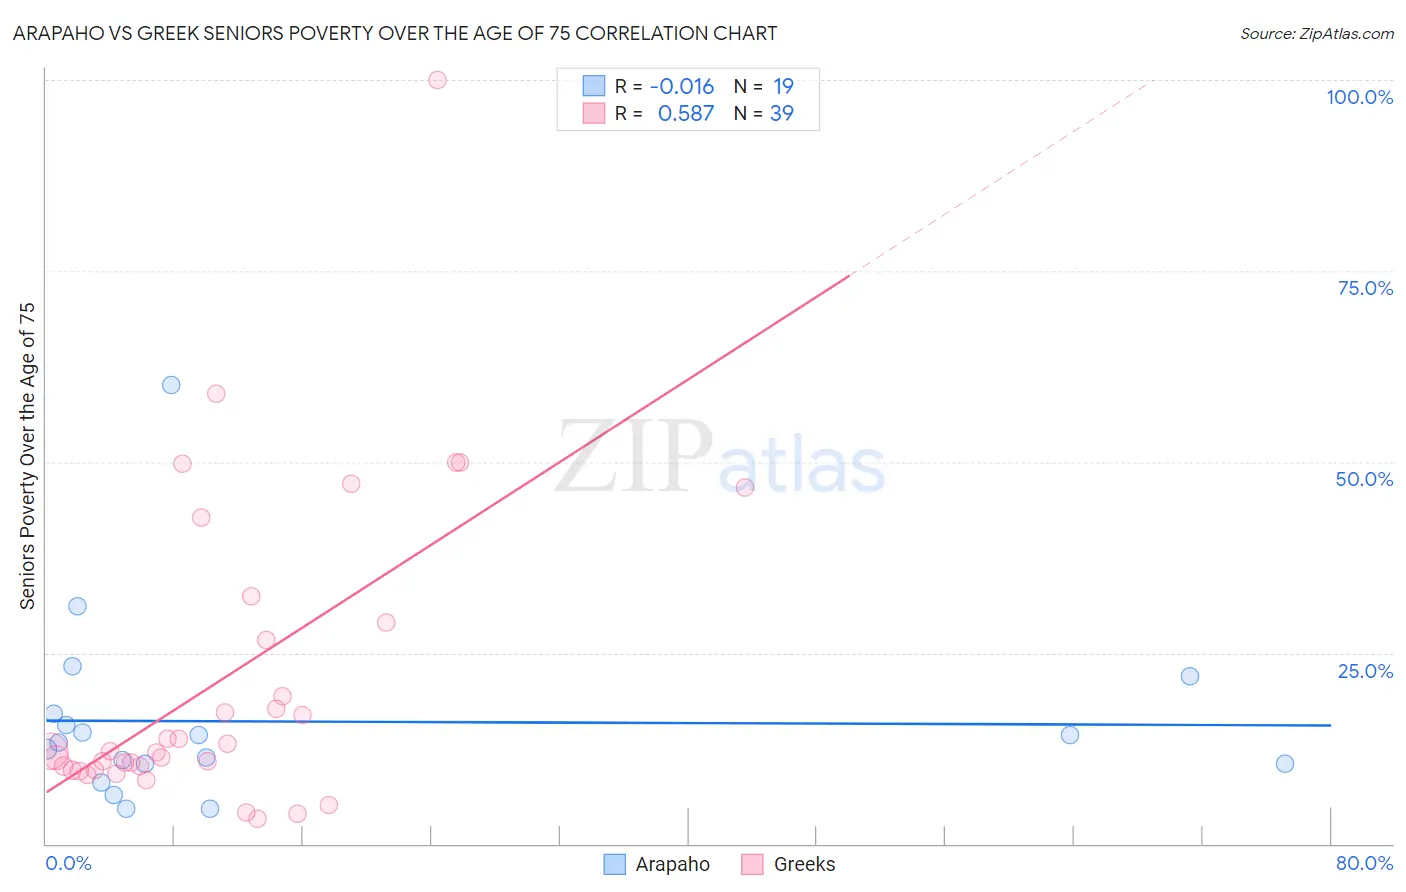 Arapaho vs Greek Seniors Poverty Over the Age of 75